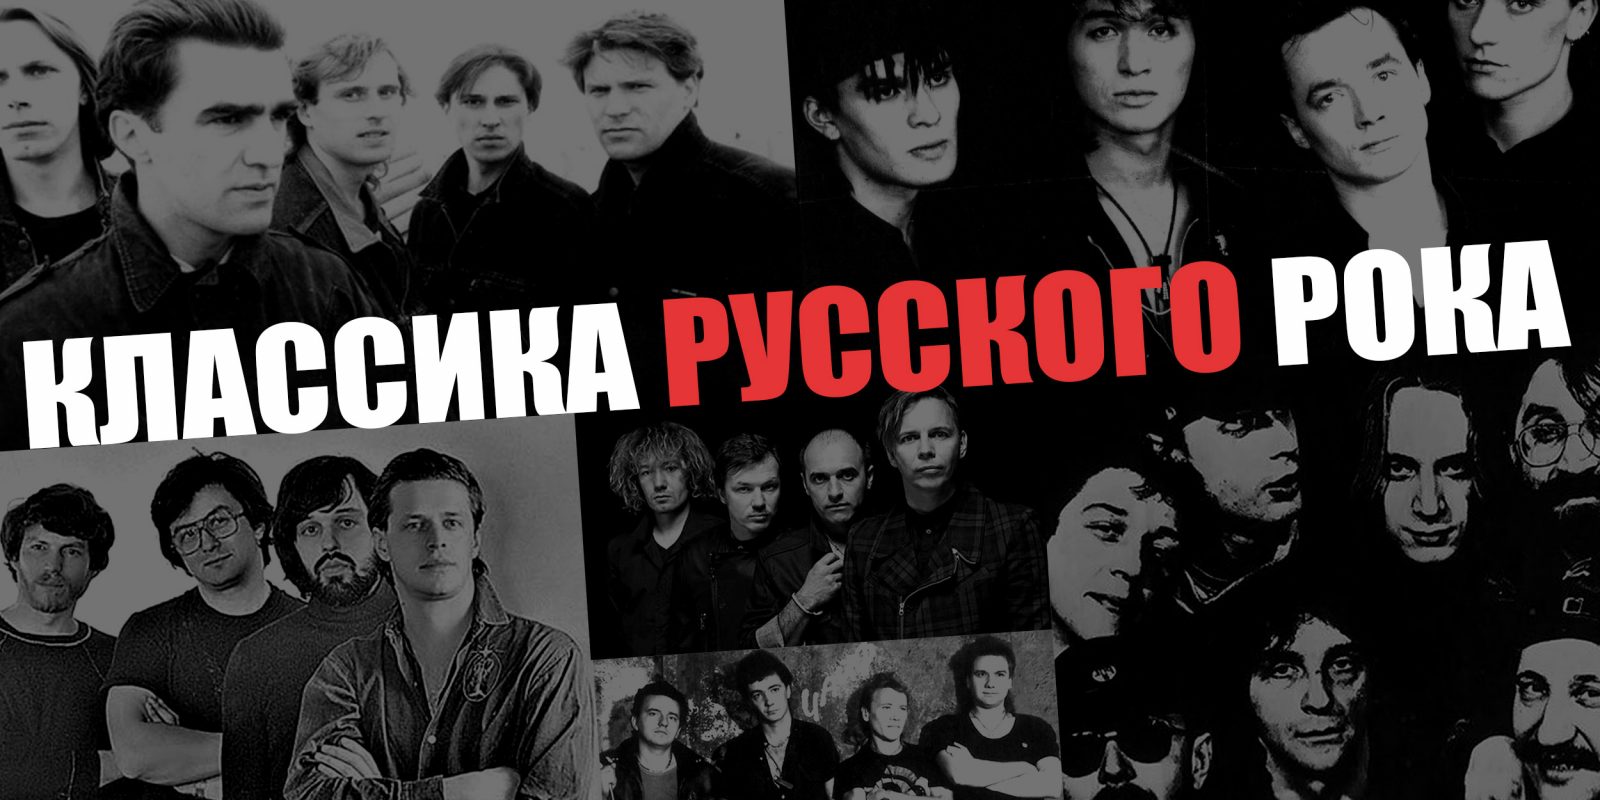 Новинки русской рок музыки